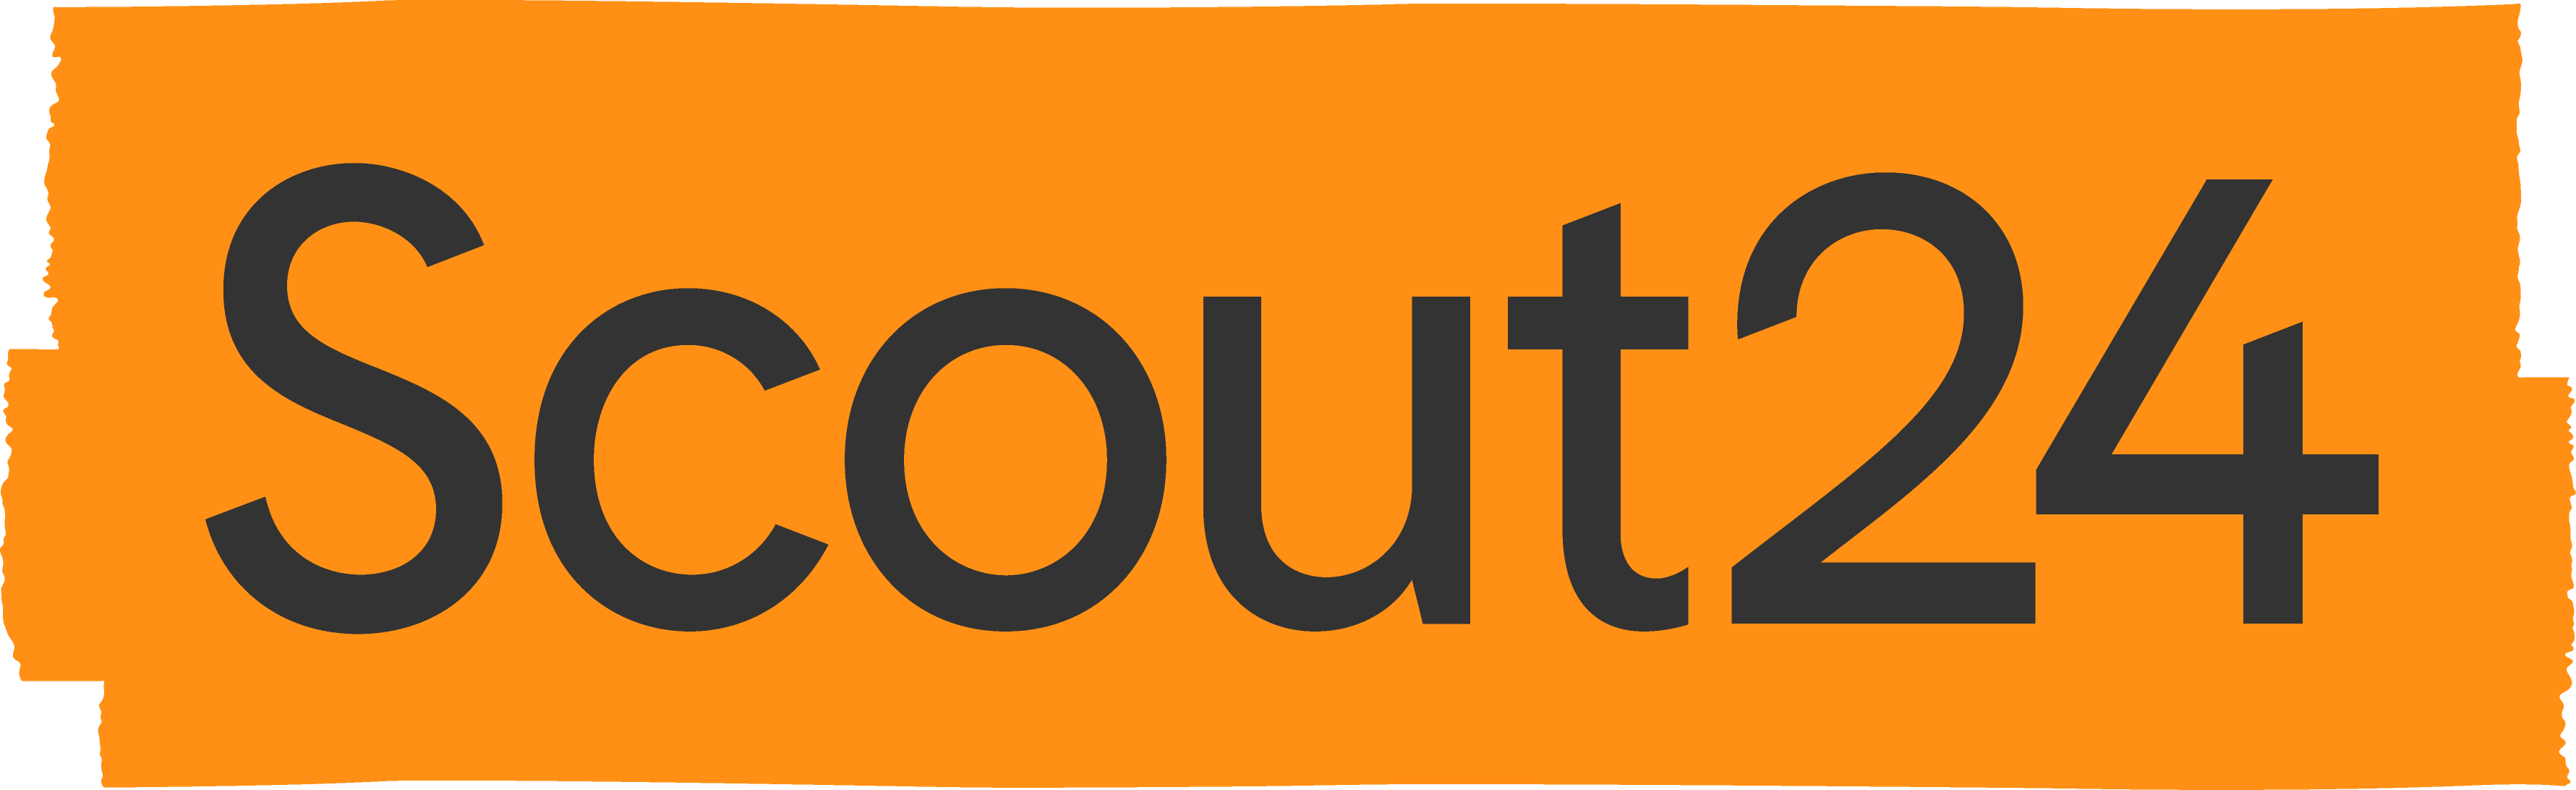 Logotipo de Scout24-image